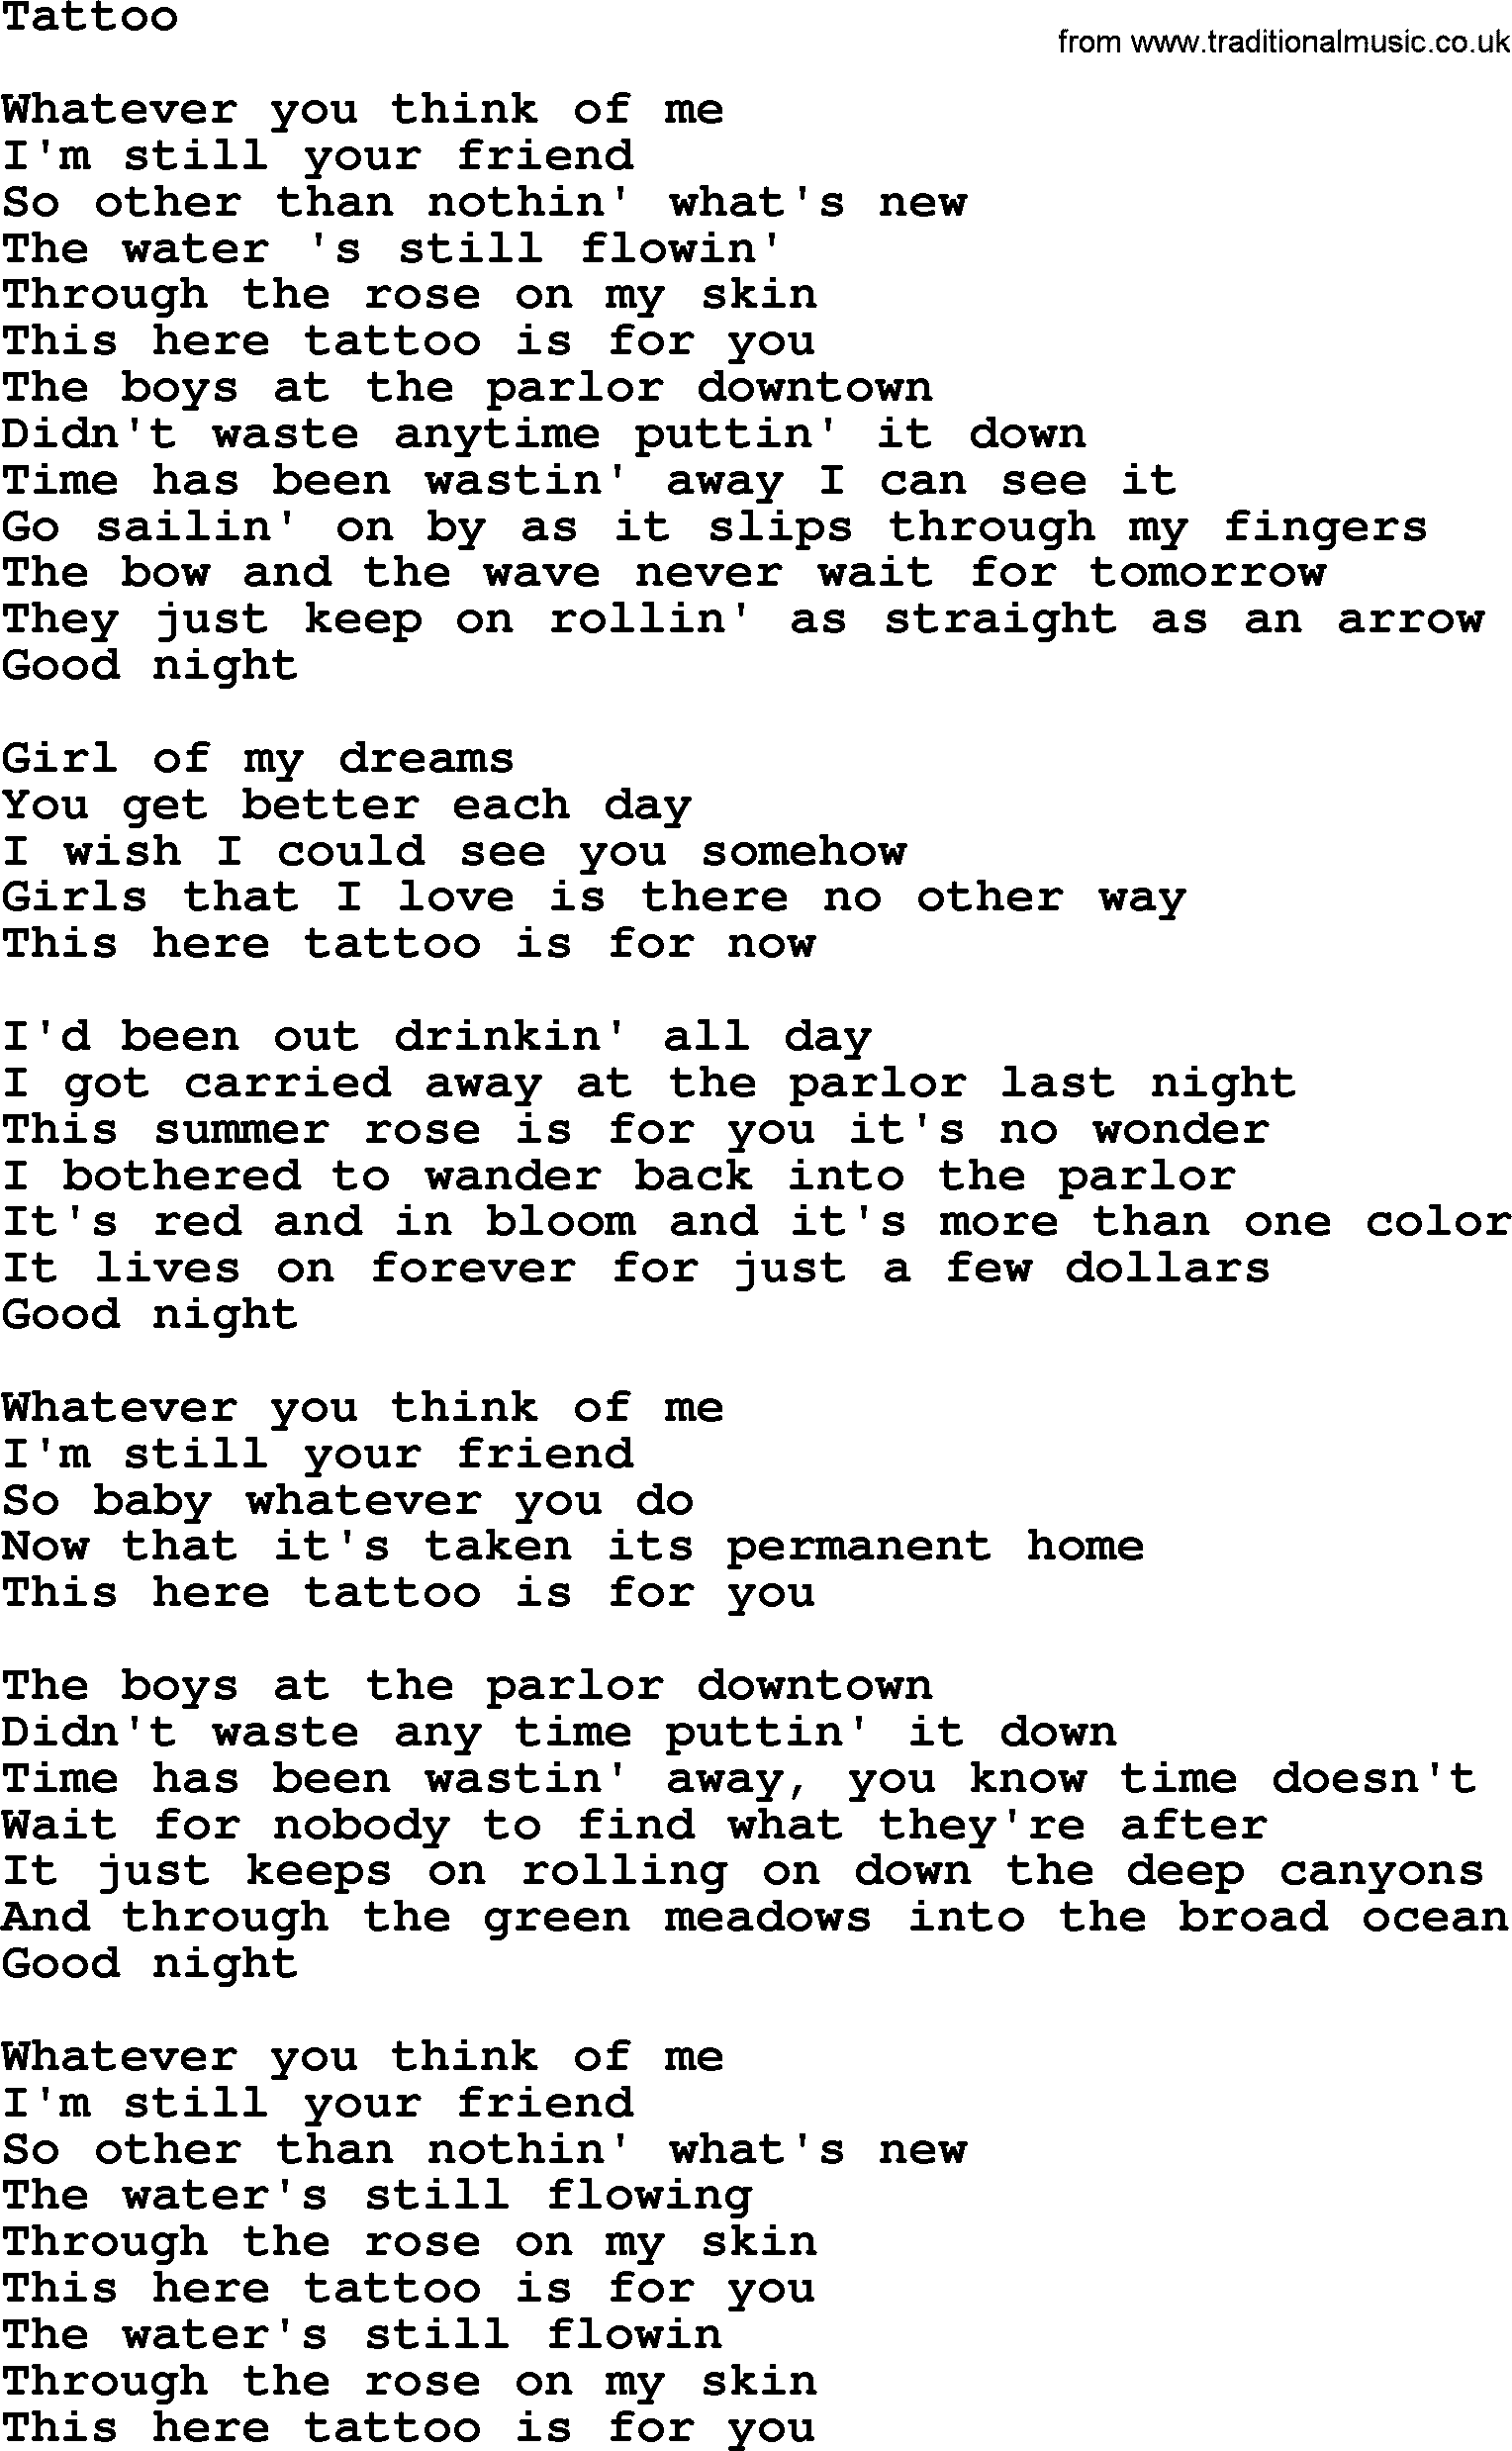 Gordon Lightfoot song Tattoo, lyrics